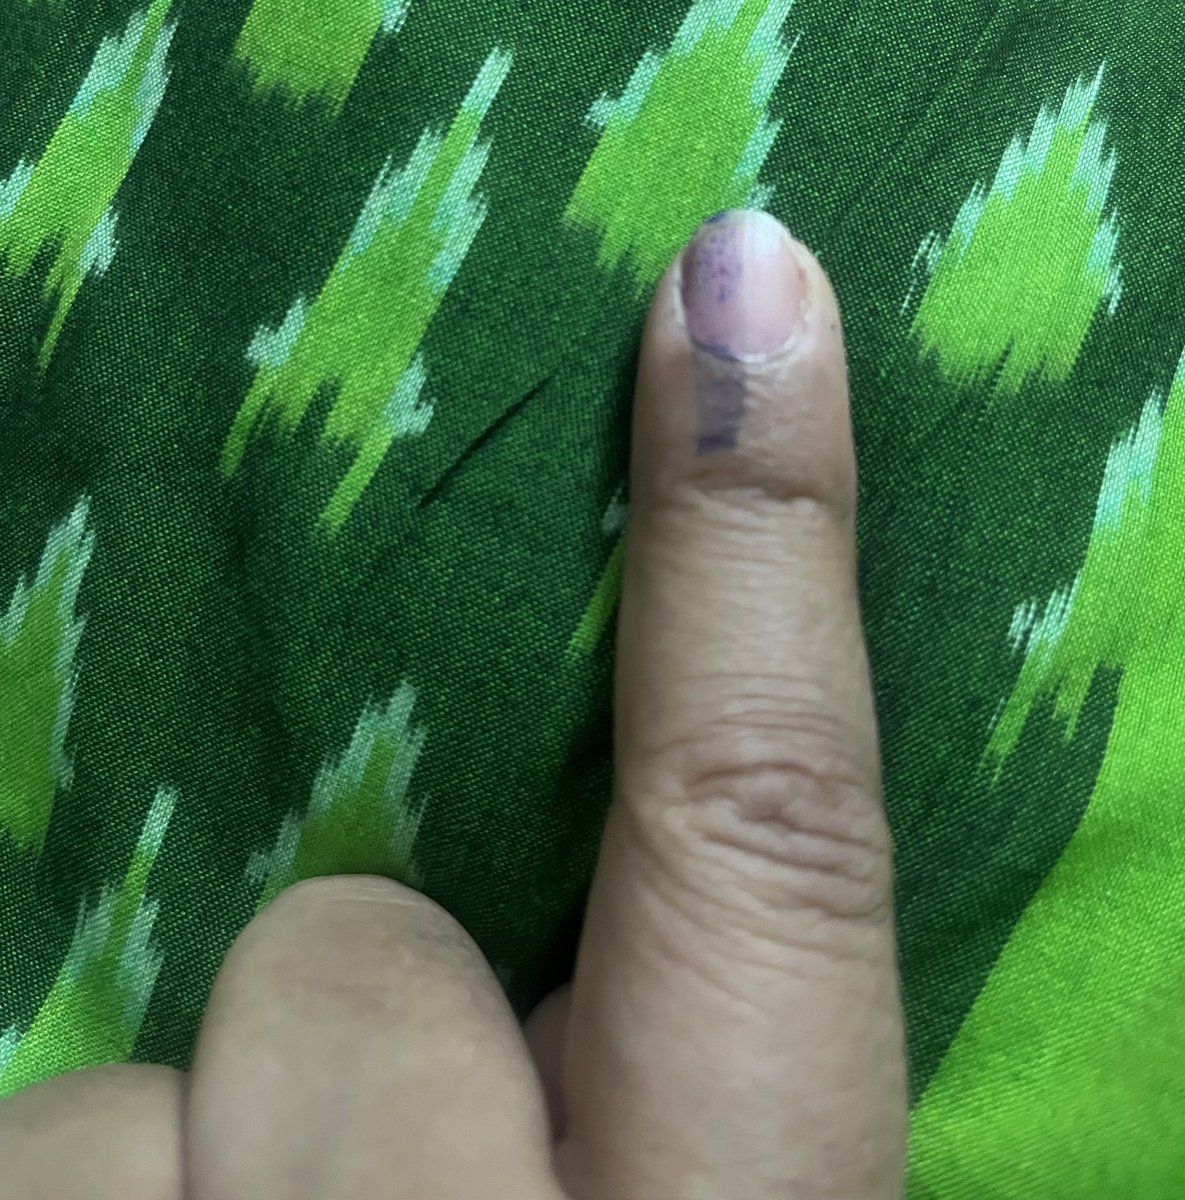 And my #Vote My Inked Finger… #VotingDay